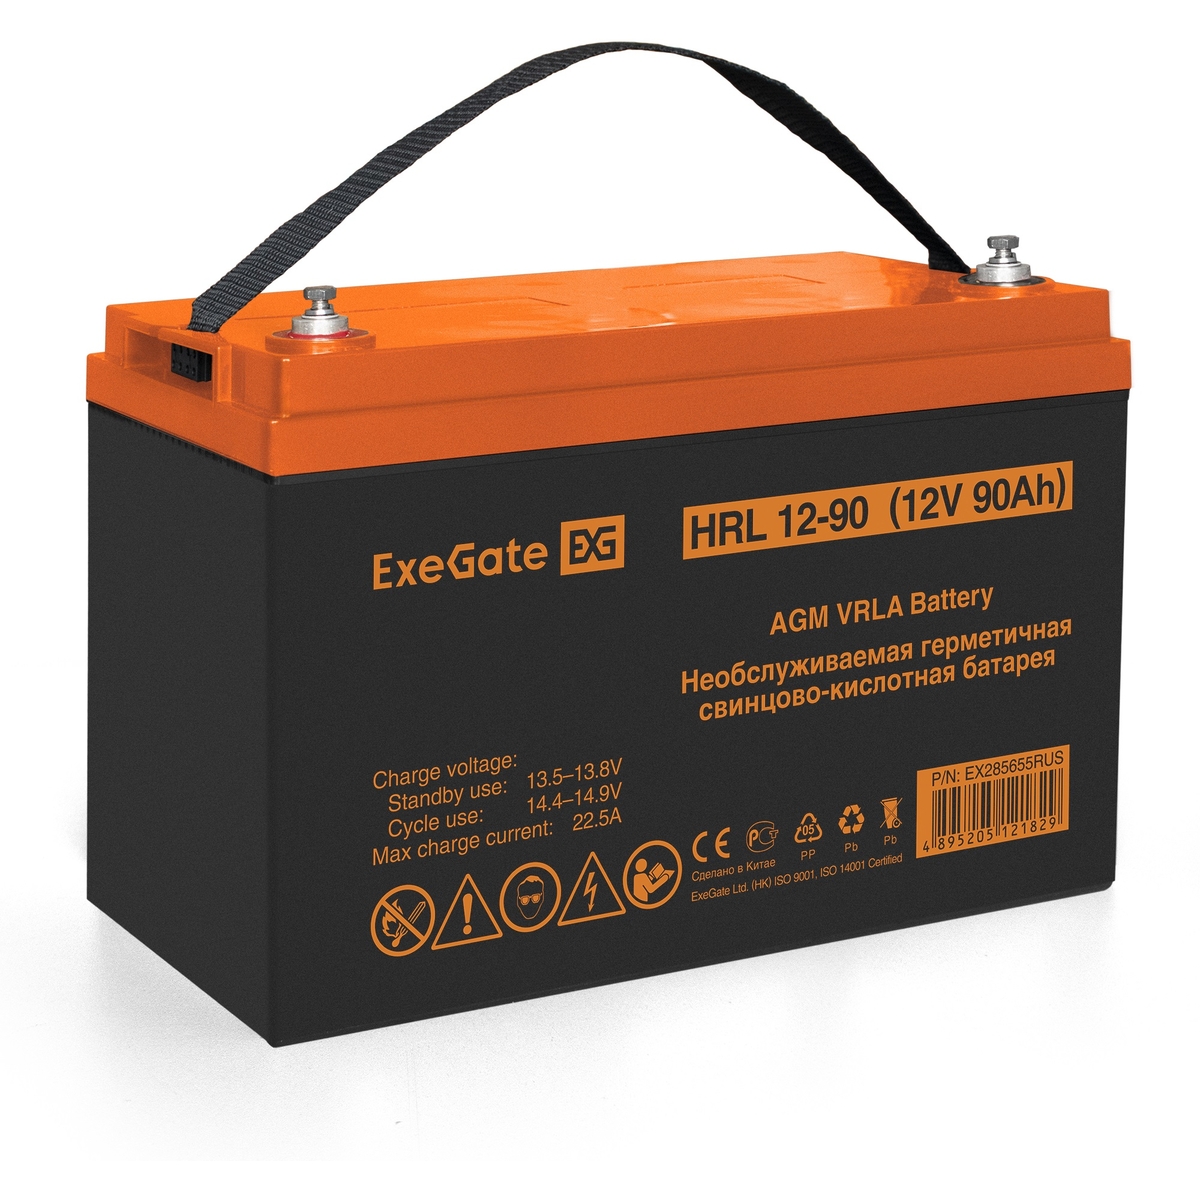 UPS set EX296001 + battery 90Ah EX285655 2 piece